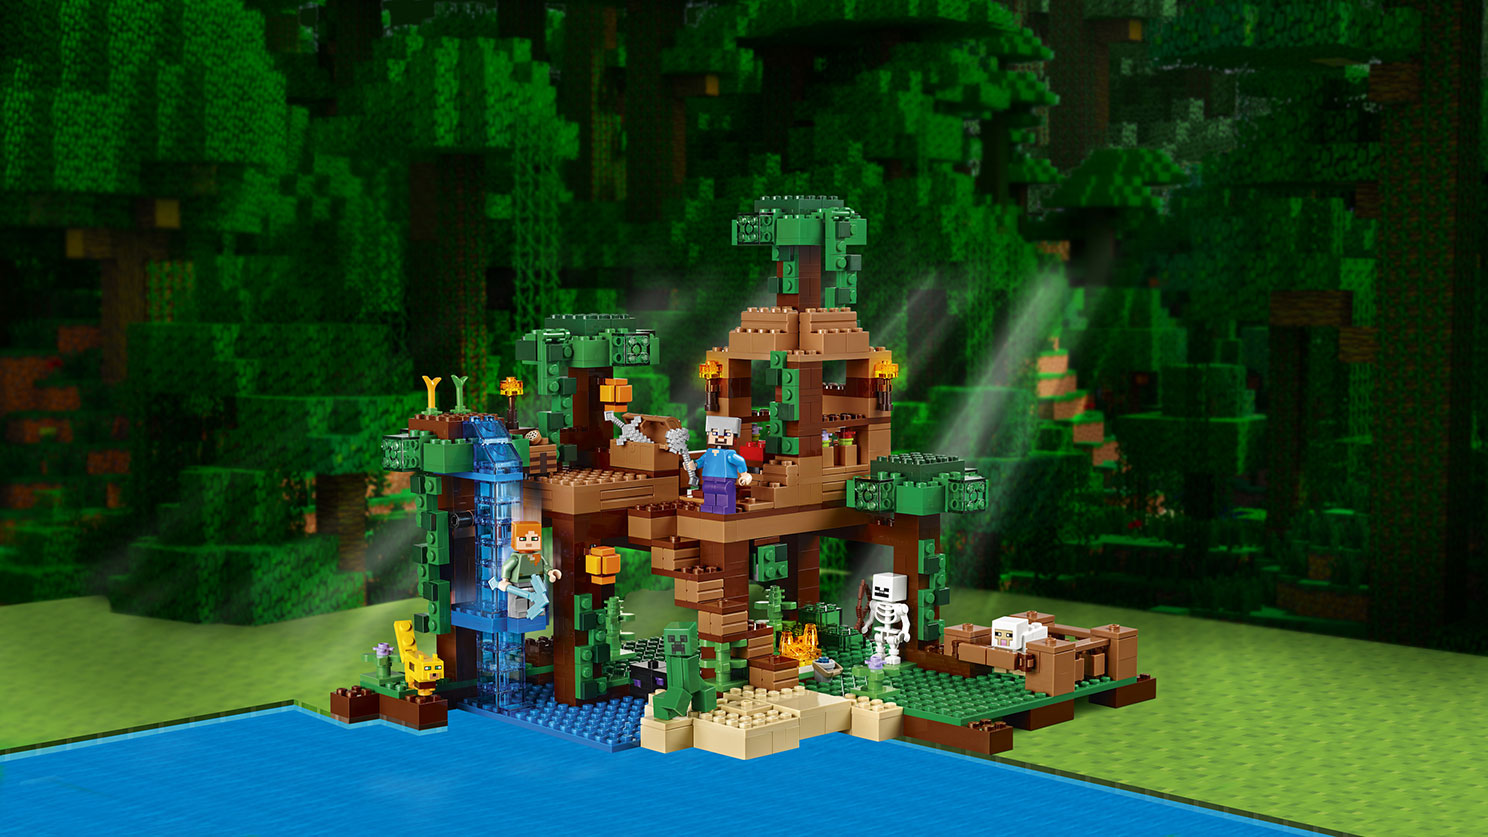 The Jungle Tree House Lego Minecraft Sets Lego Com For Kids